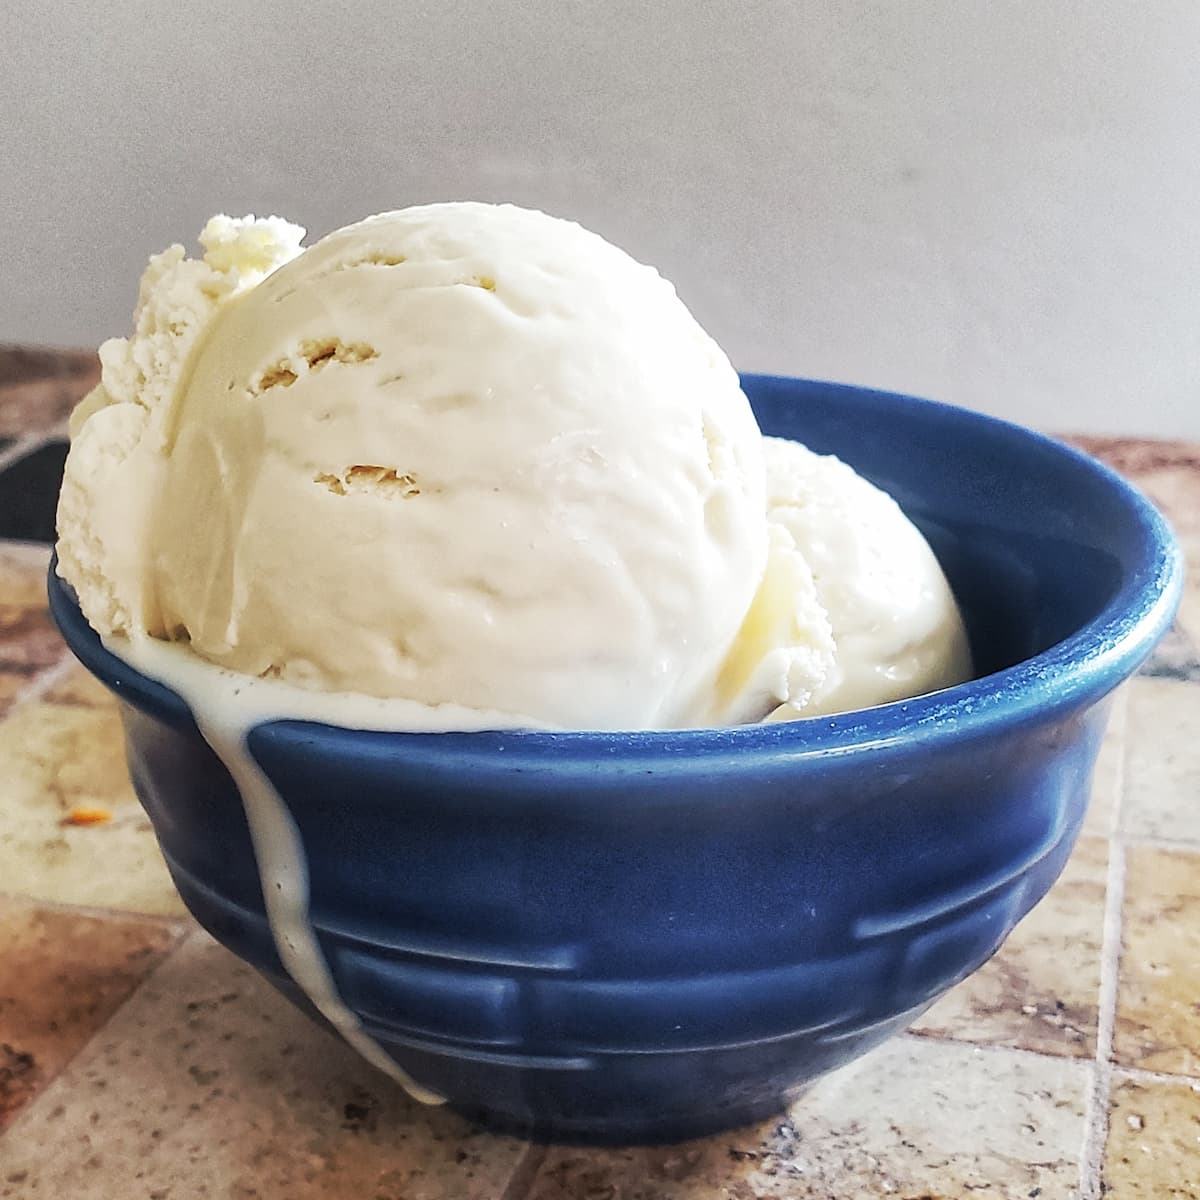 homemade vanilla ice cream from Cleveland cooking. 2 scoops of homemade vanilla ice cream in a blue bowl.